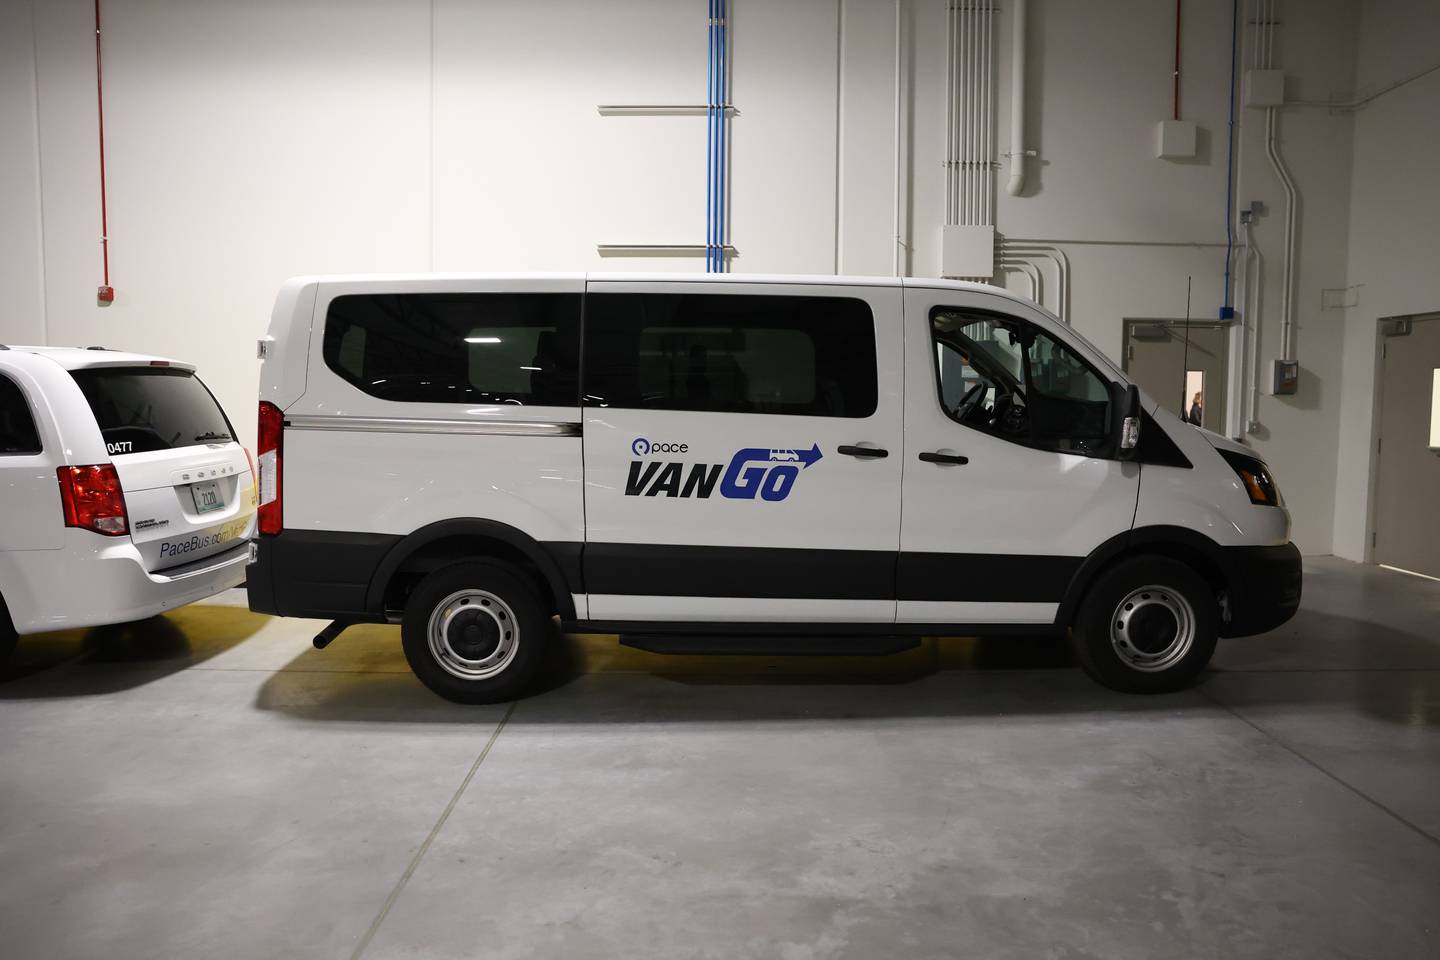 A VanGo vehicle, part of Pace’s pilot program vanpool option, sits inside the New Heritage Plainfield Facility.